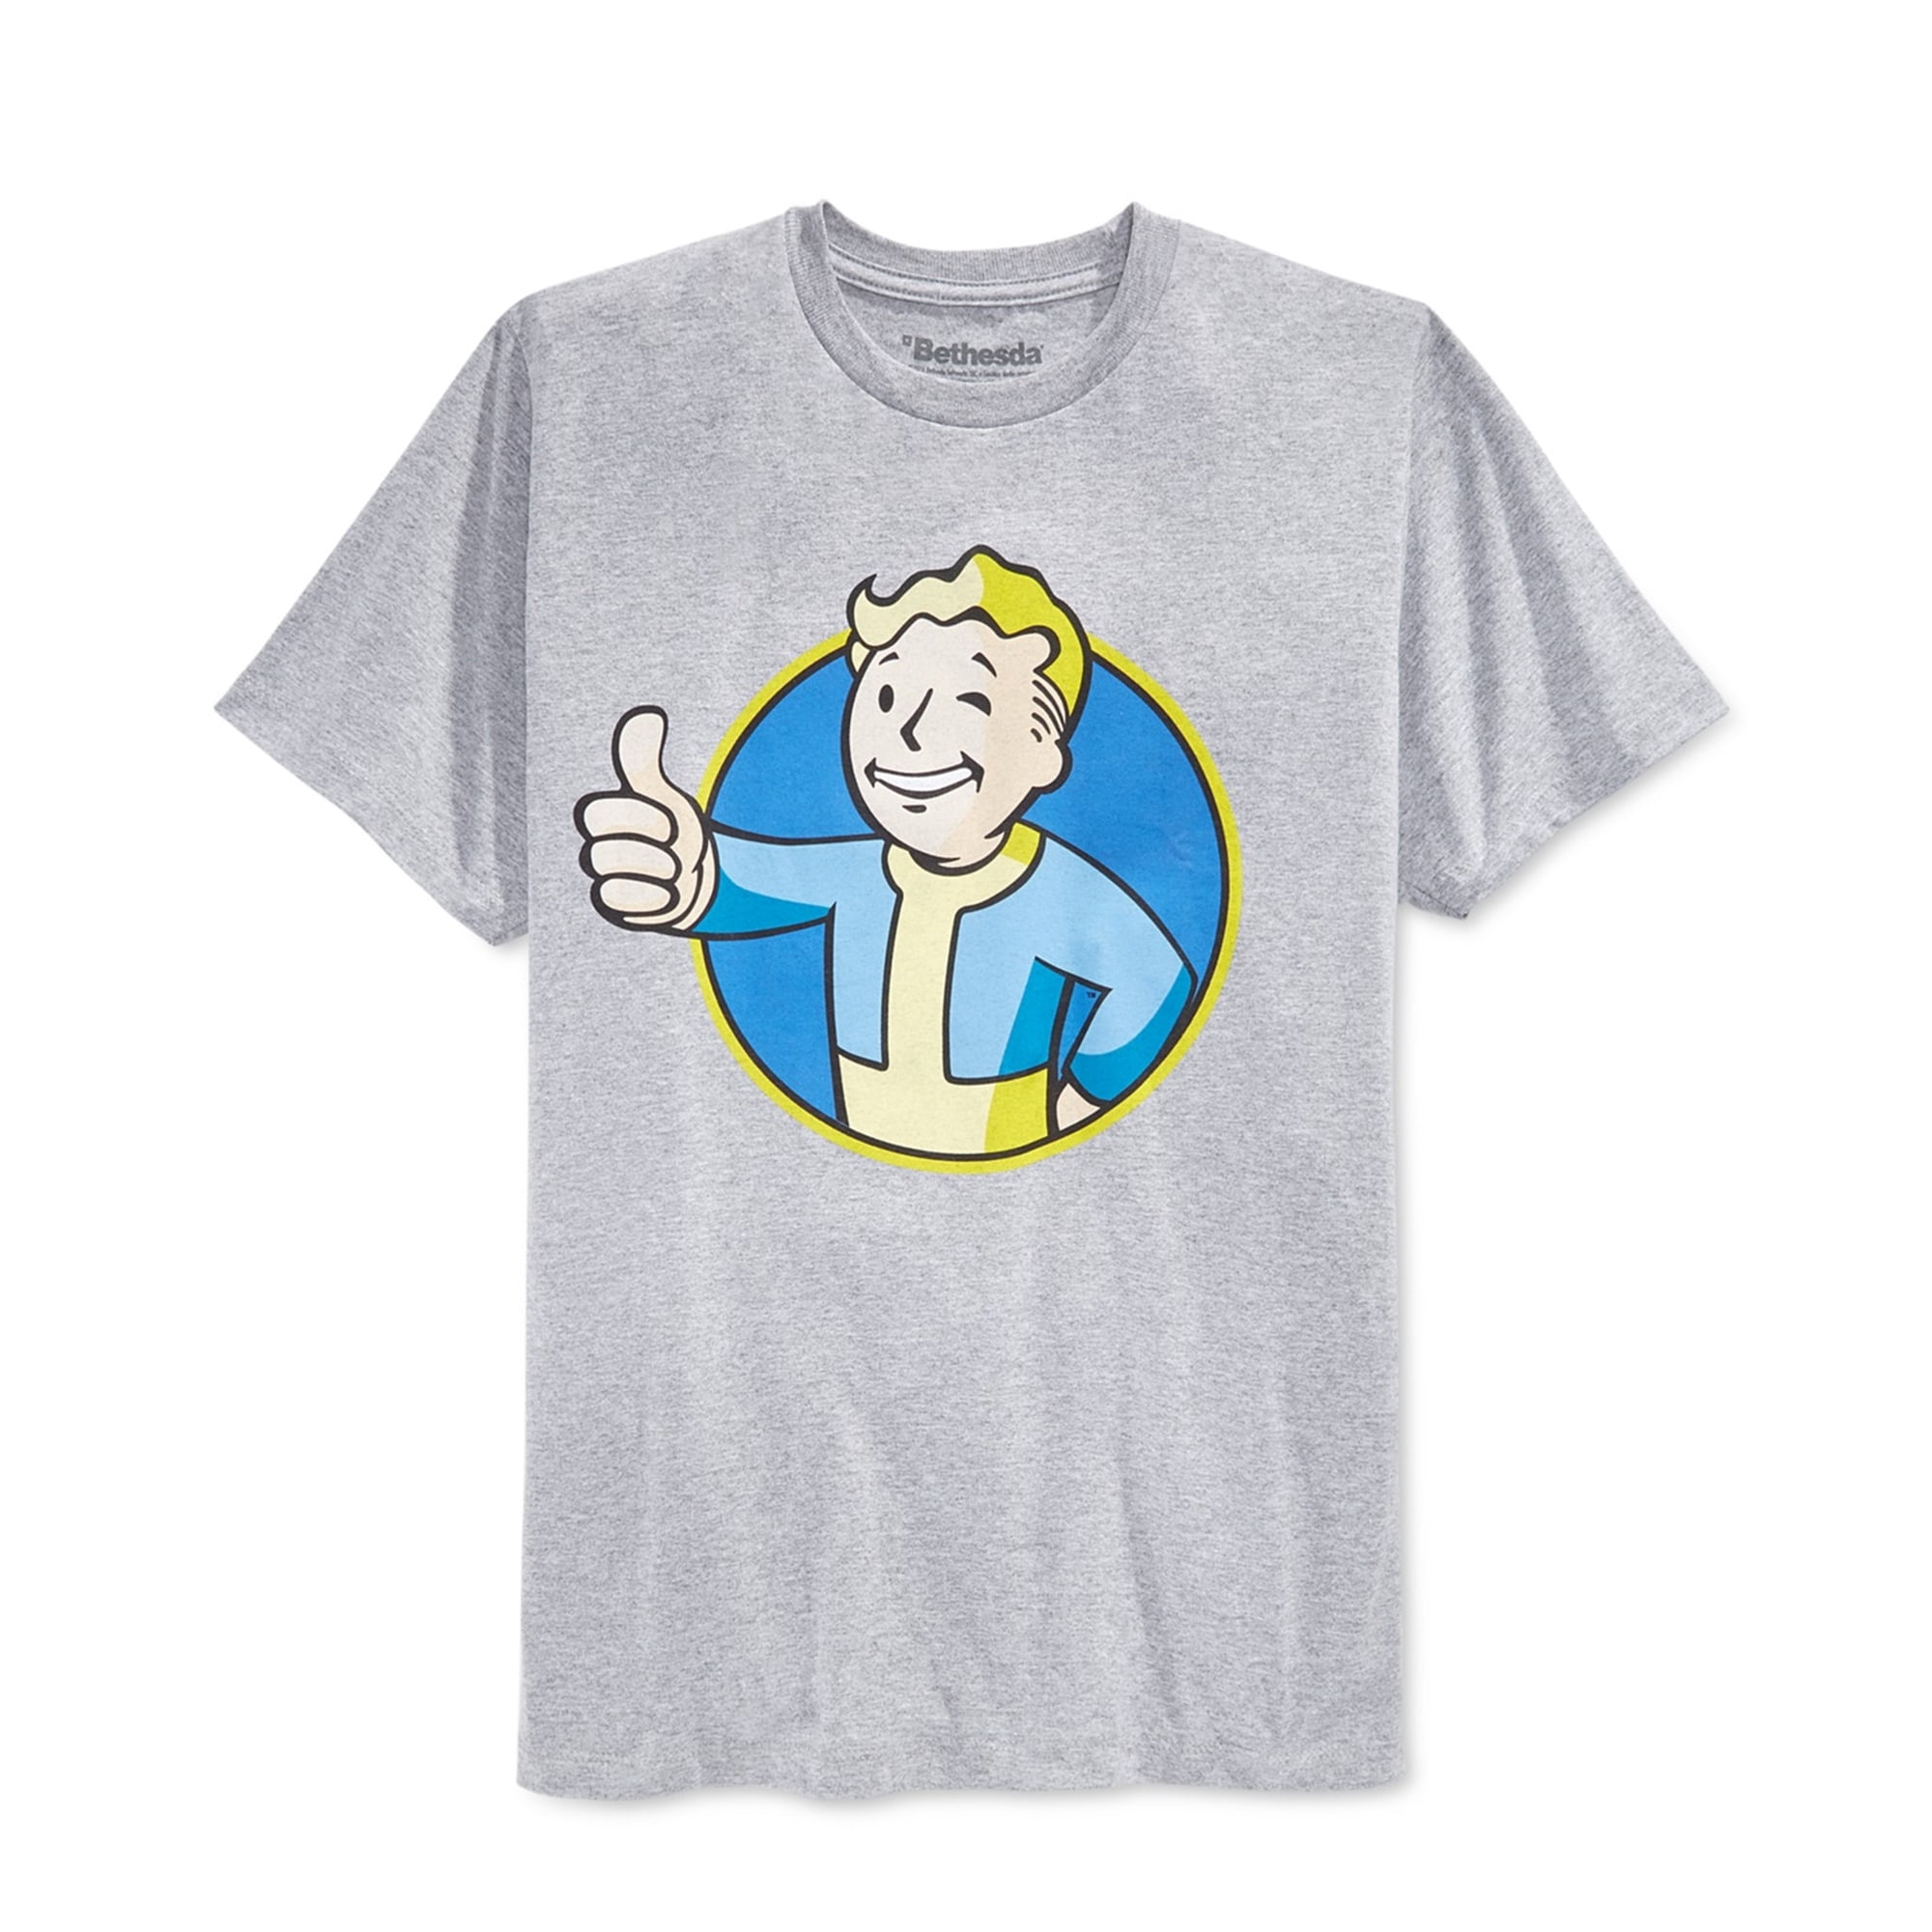 Bioworld - Bioworld Mens Thumbs Up Graphic T-Shirt - Walmart.com ...